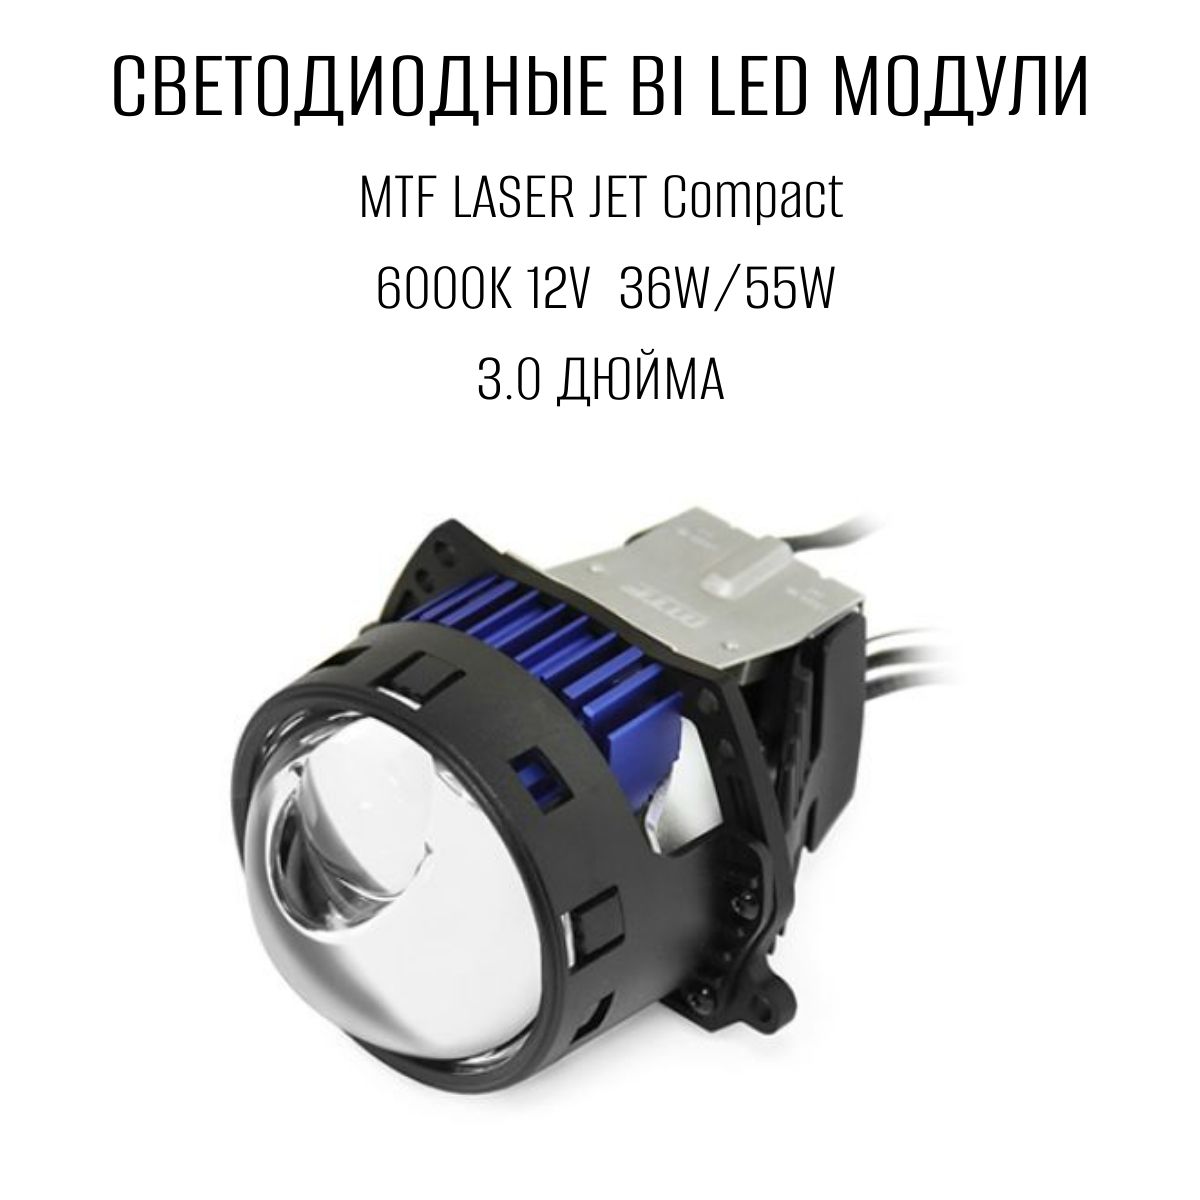 Bi led линзы mtf. MTF Light Laser Jet bi-led 3.0 6000k линзы. Линзы МТФ би лед. Линзы МТФ би лед Jet 3 дюйма. MTF LASERJET bi led.